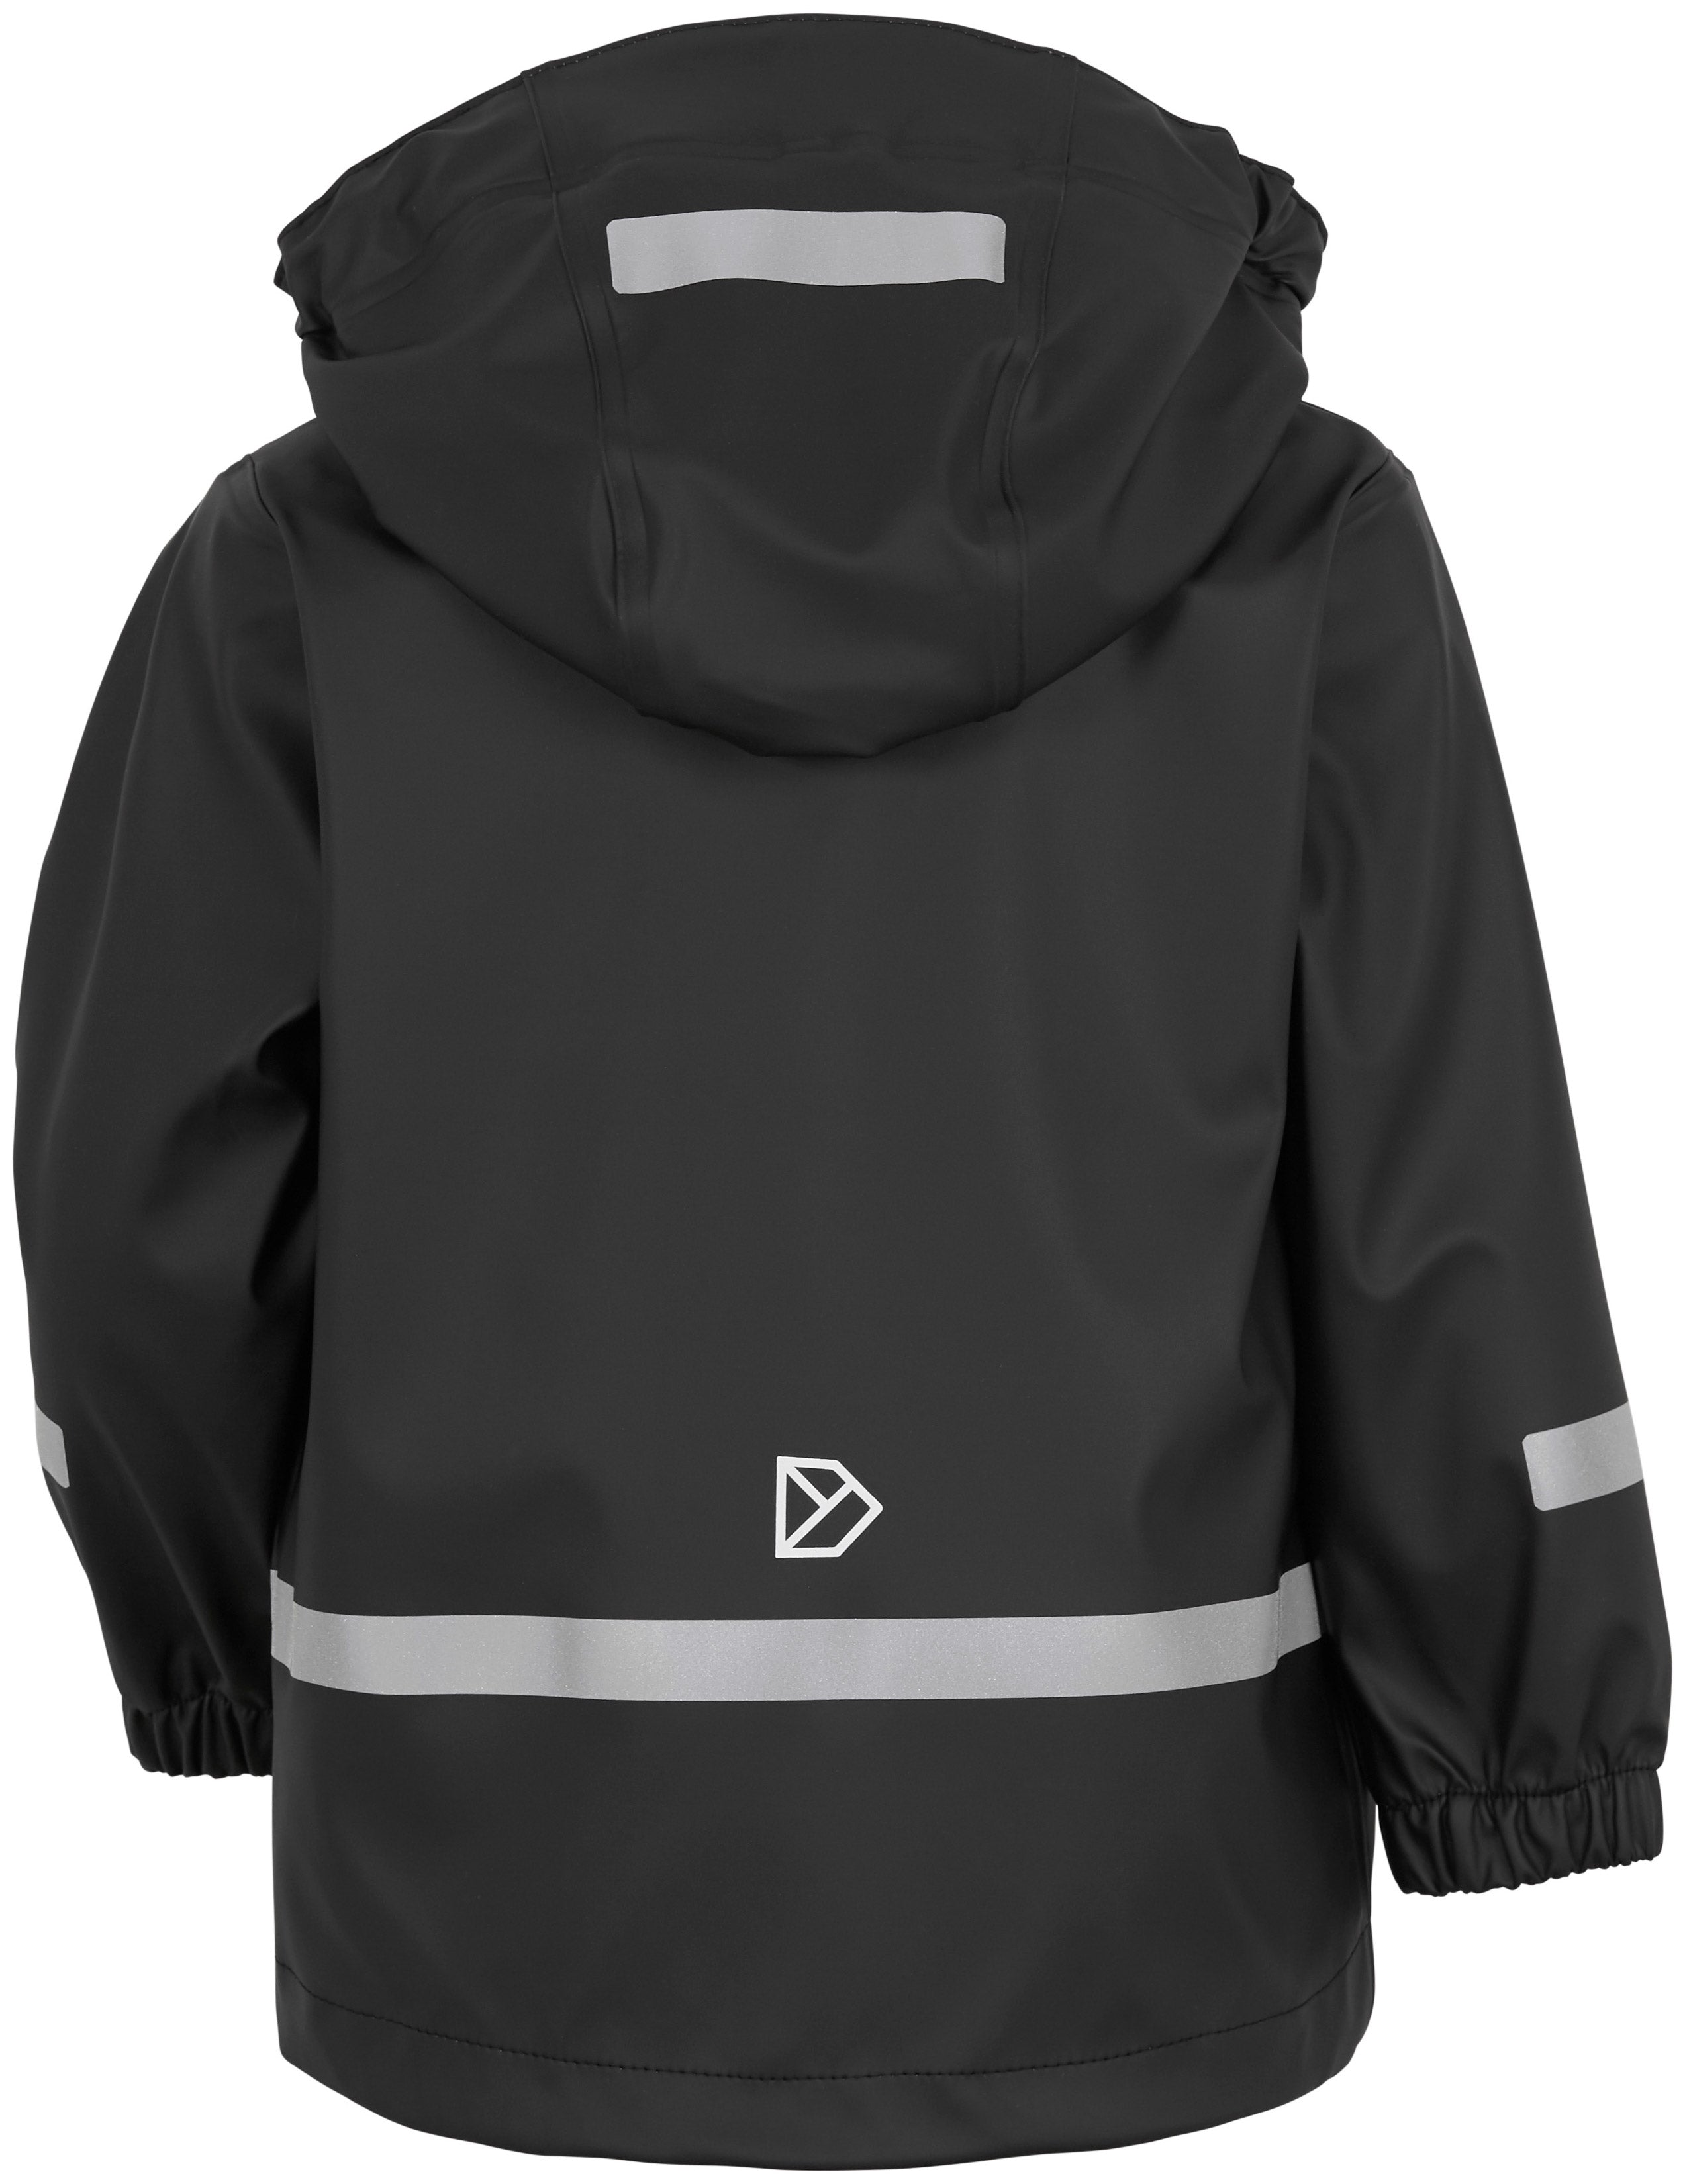 Didriksons Pölen Kid´s Jacket Galon® in Black 